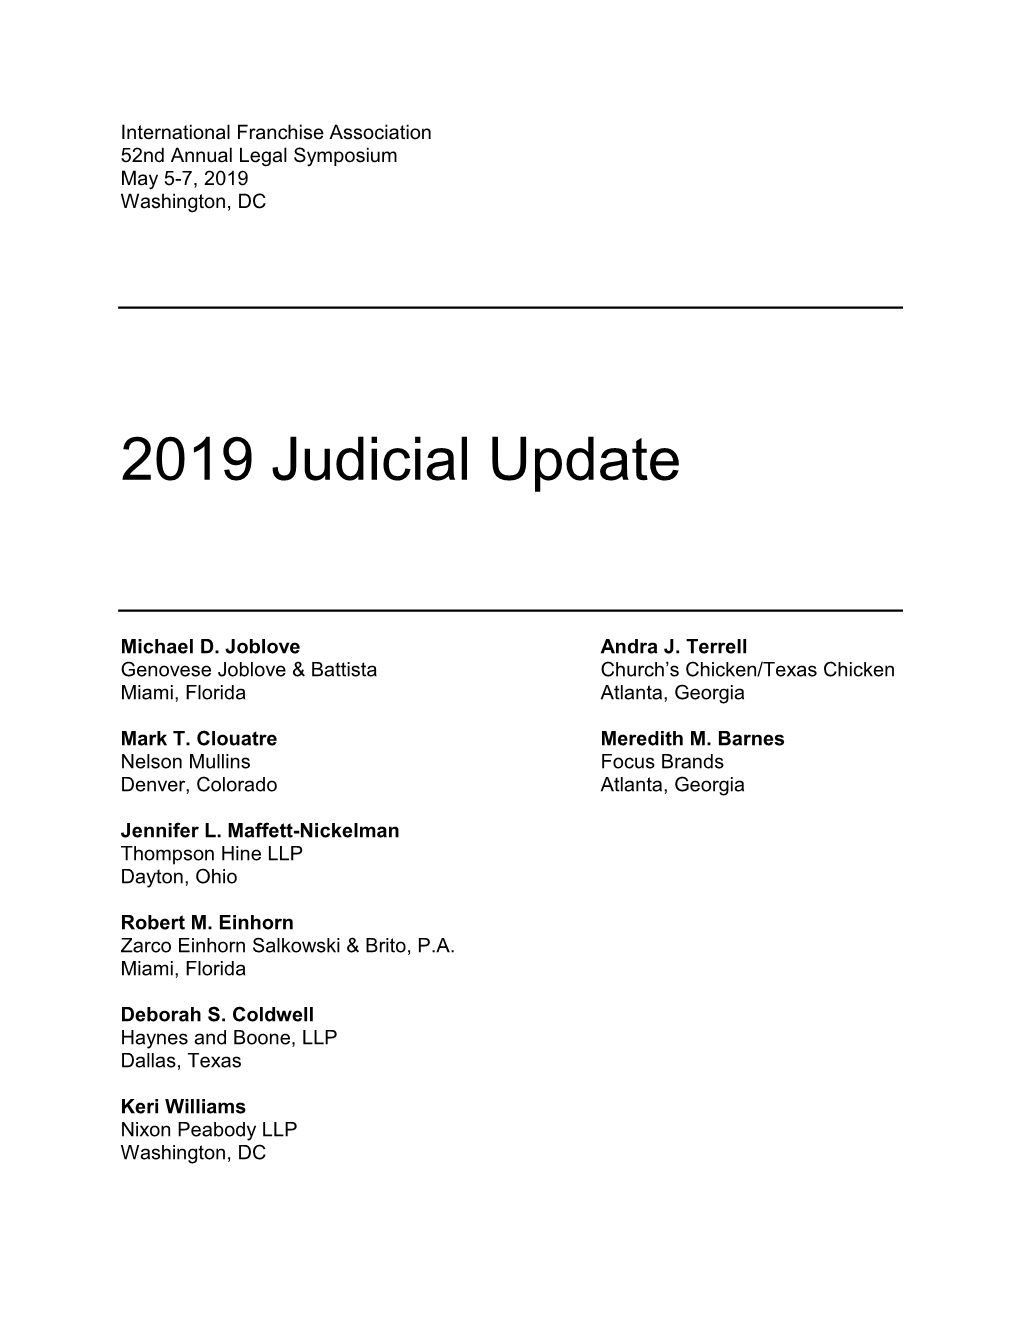 2019 Judicial Update